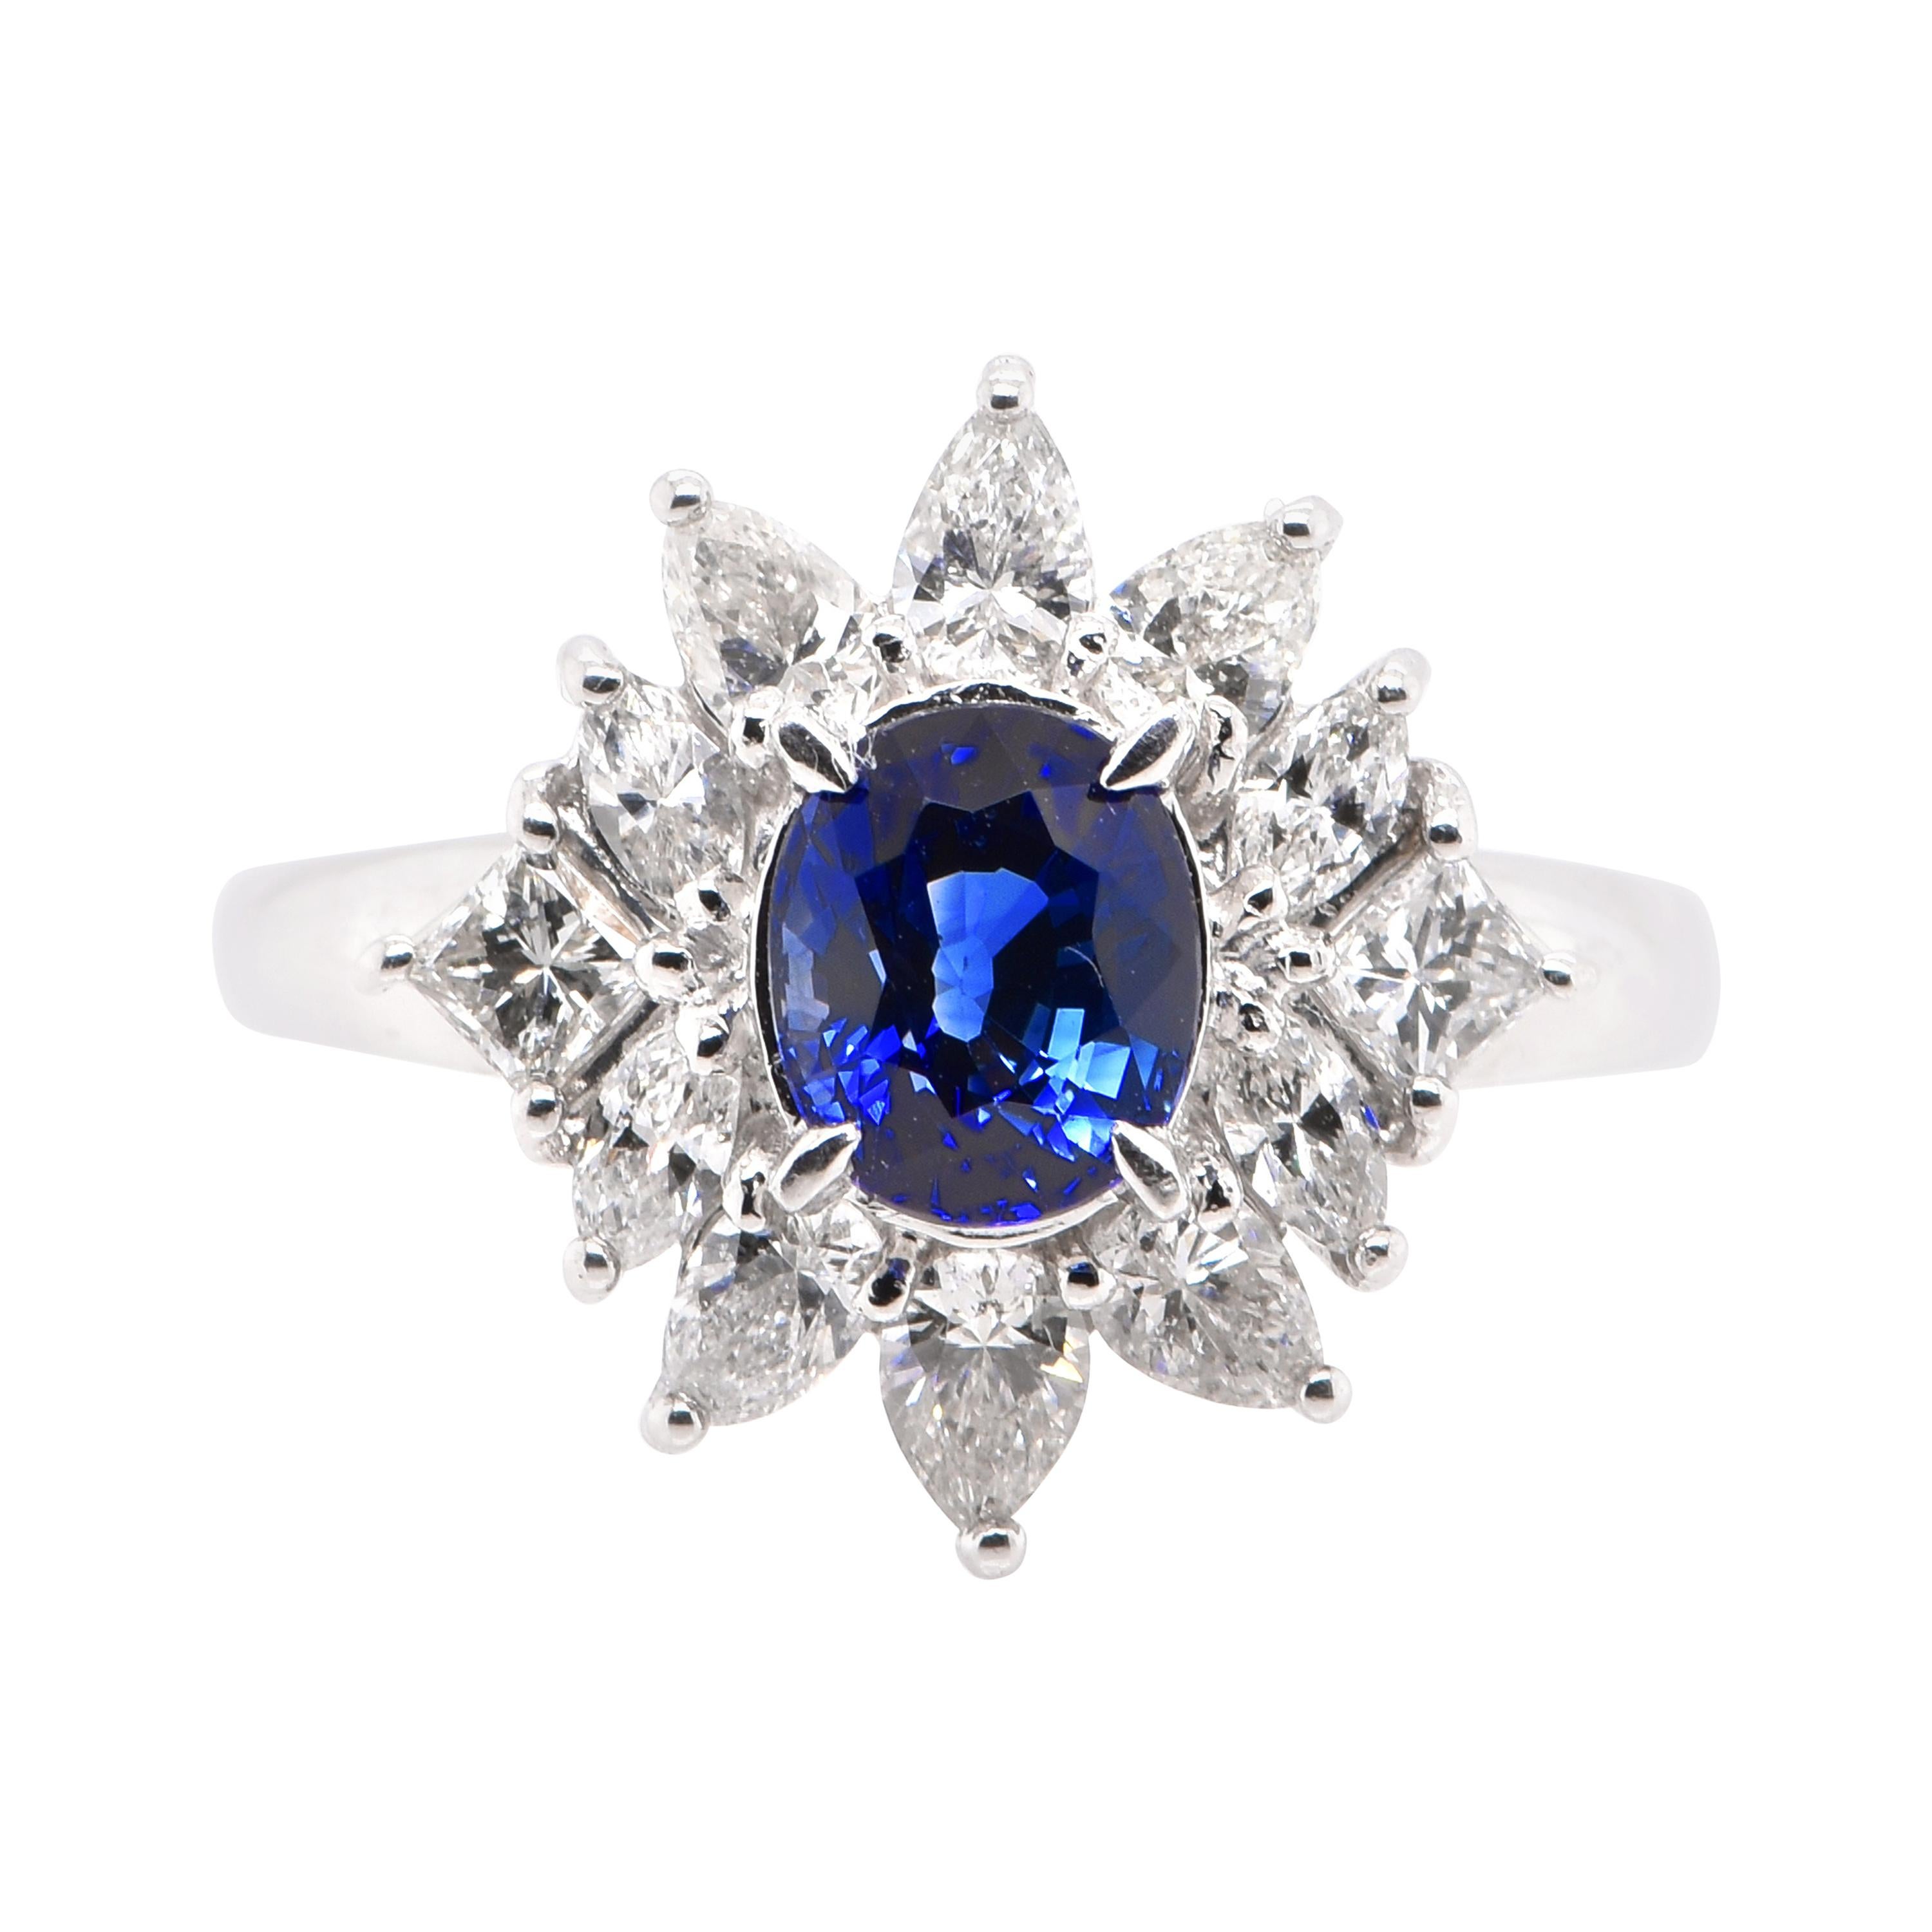 1.11 Carat Natural Royal Blue Sapphire and Diamond Ring Set in Platinum